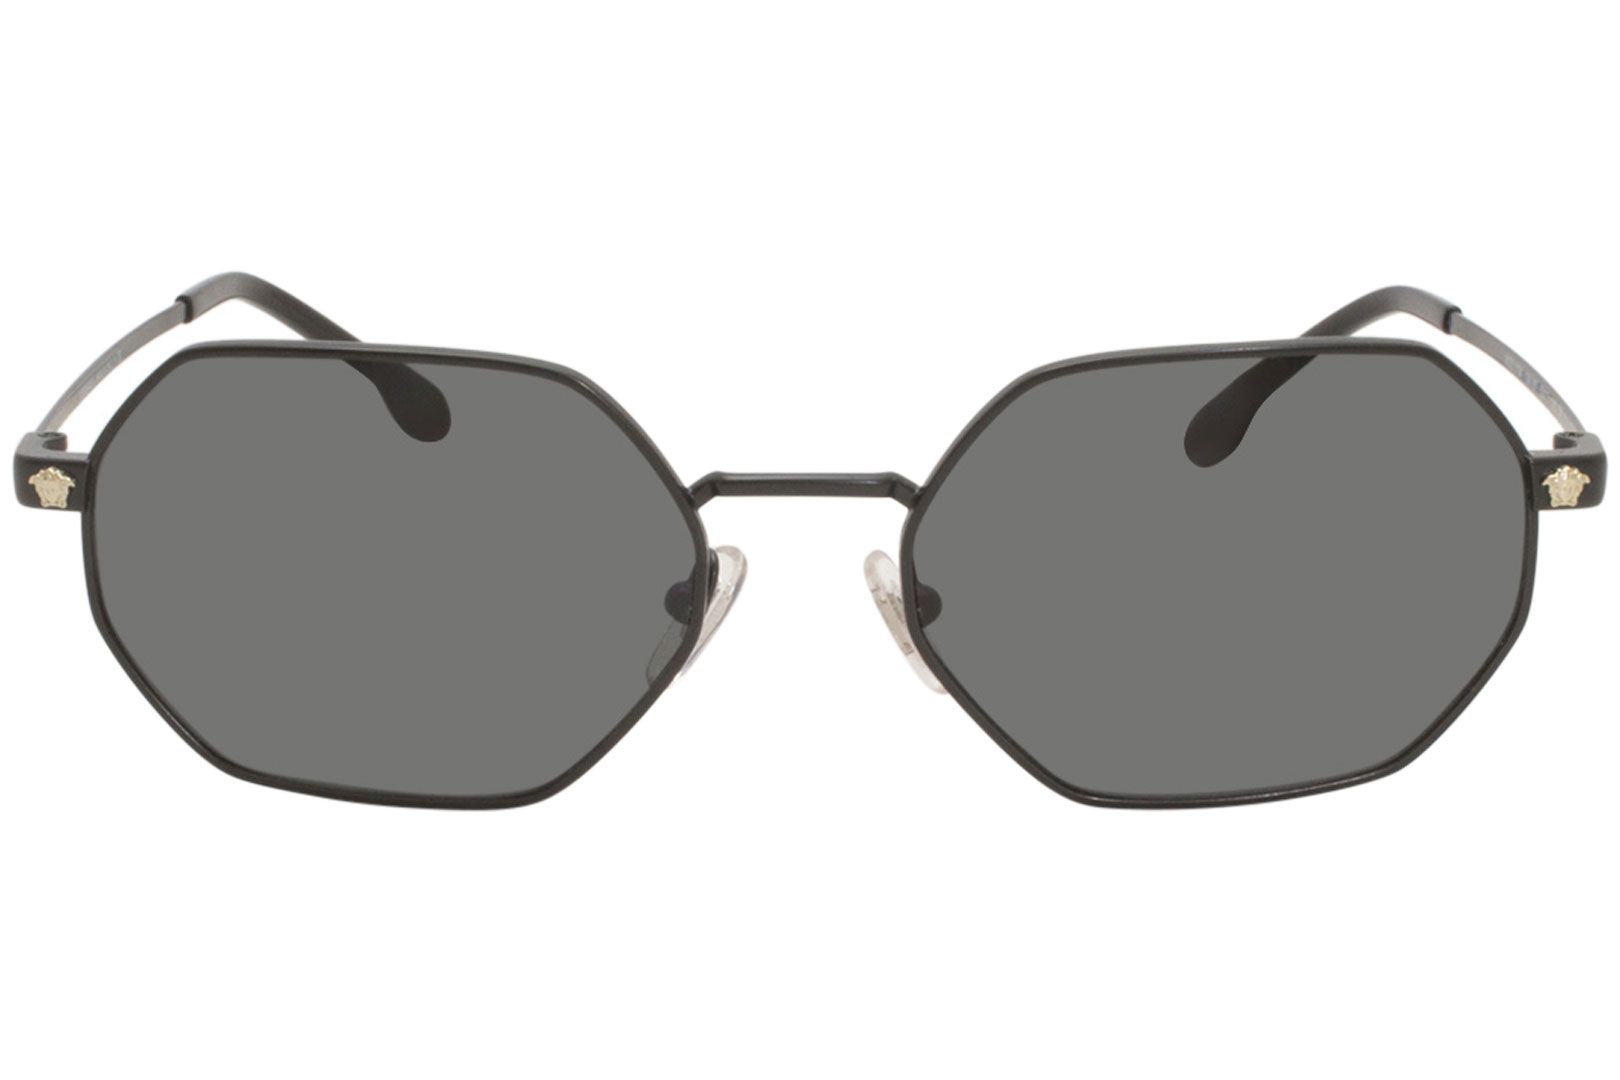 Versace VE2194 Sunglasses Men's Rectangular Shades | EyeSpecs.com